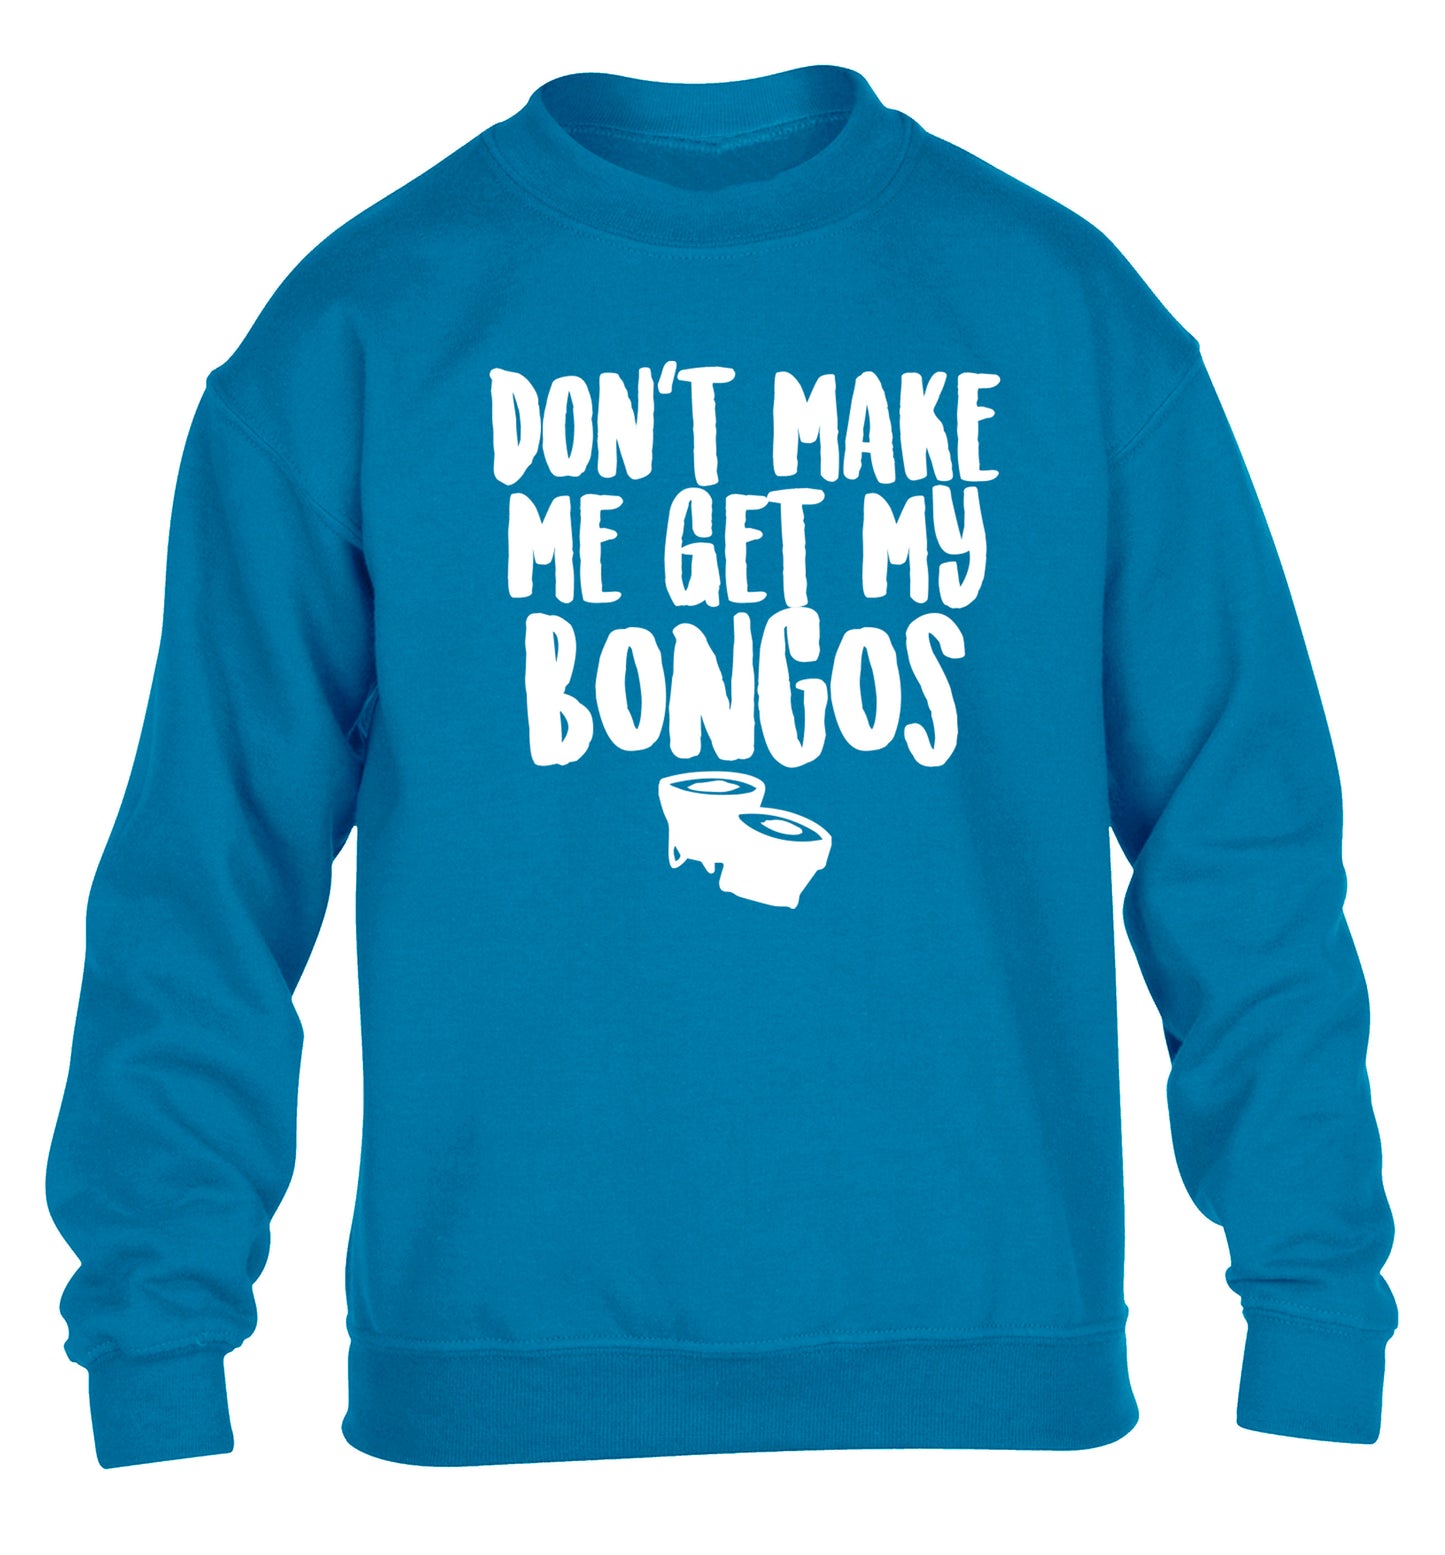 Don't make me get my bongos children's blue sweater 12-14 Years